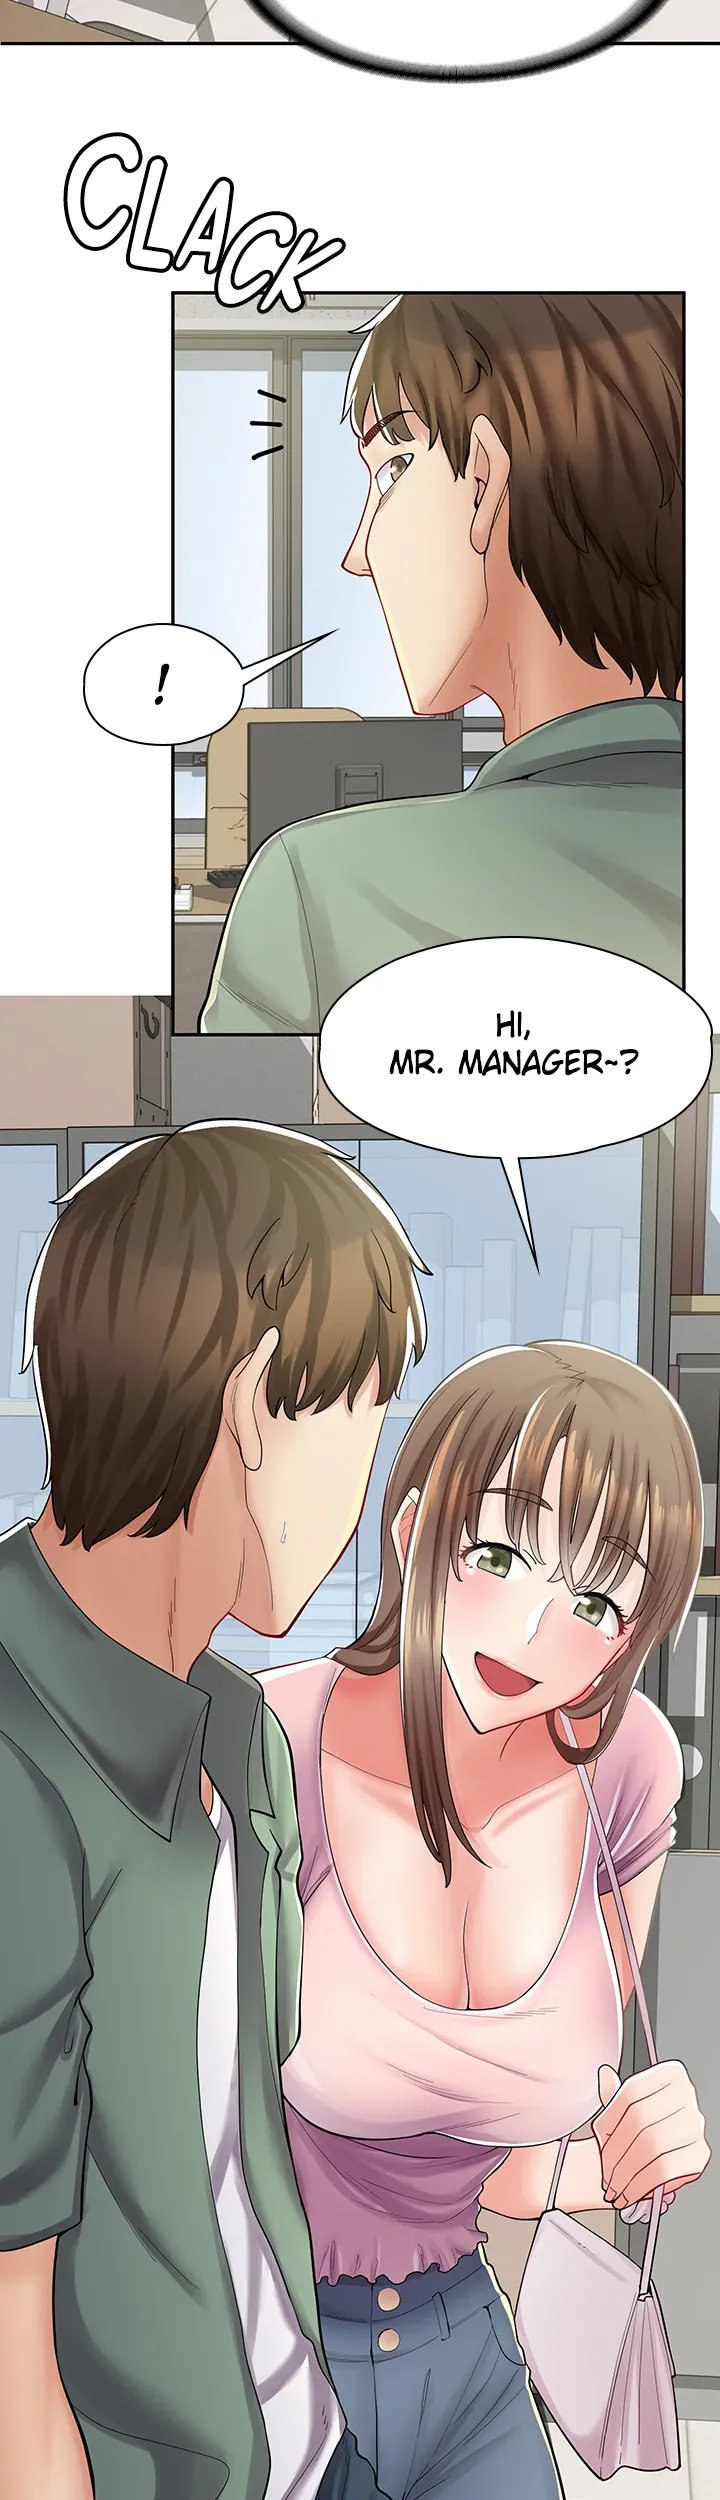 Erotic Manga Café Girls - Chapter 6 Page 7